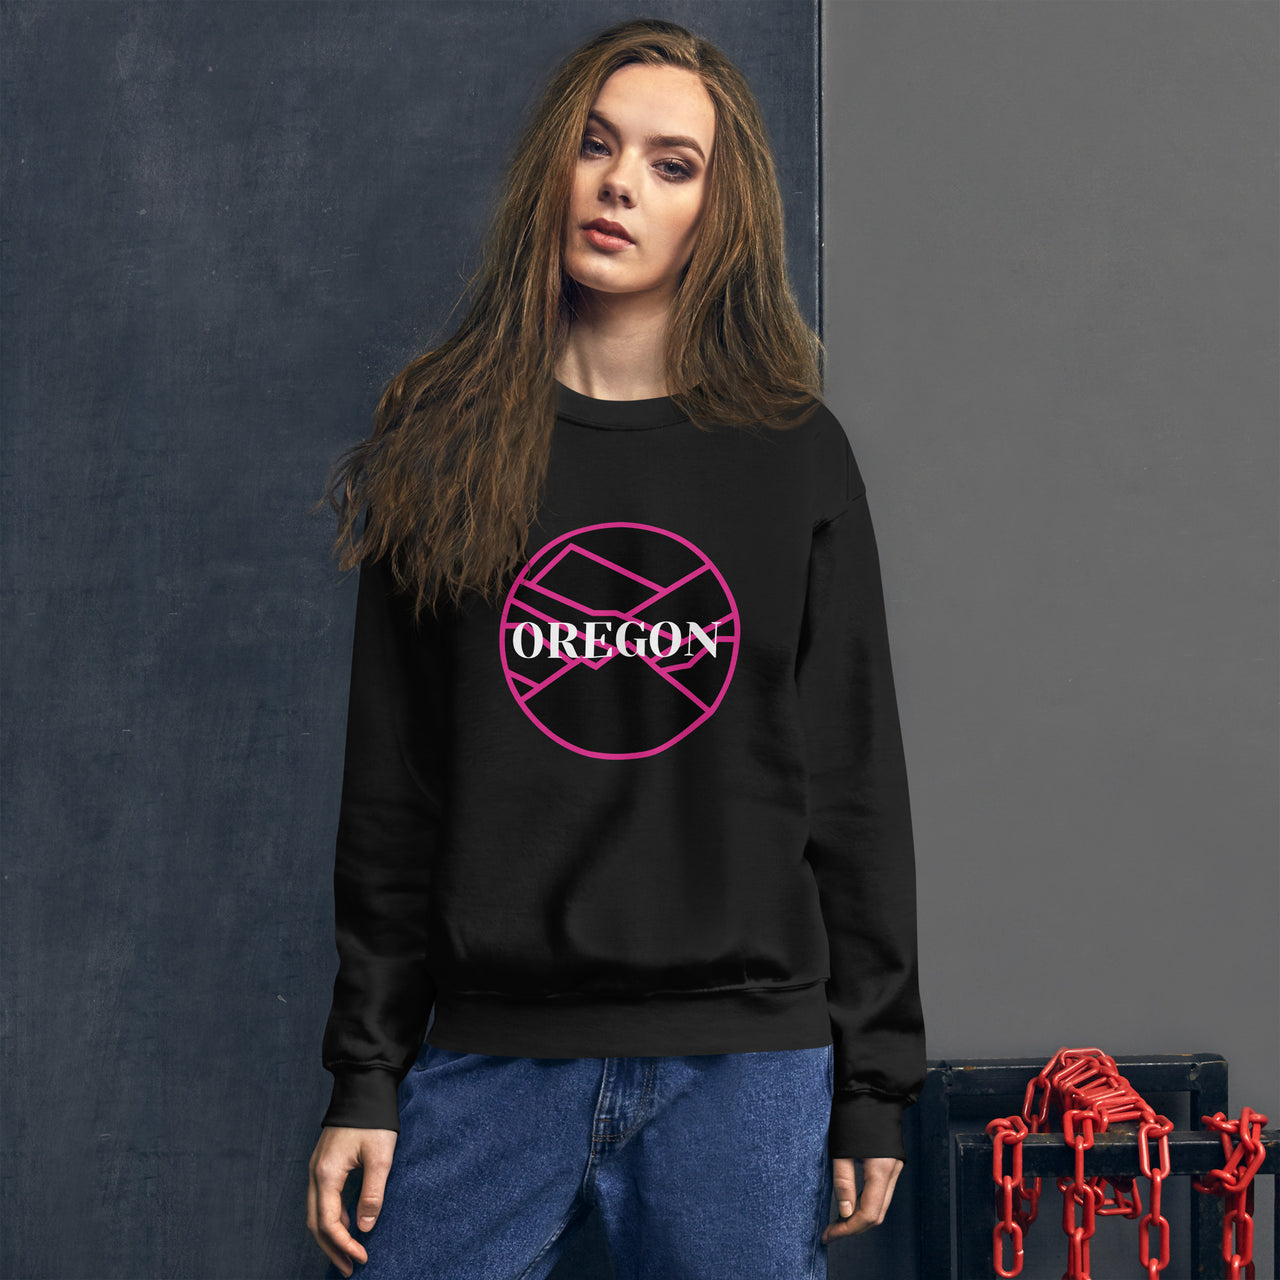 Oregon - Pink/Black - Unisex Sweatshirt